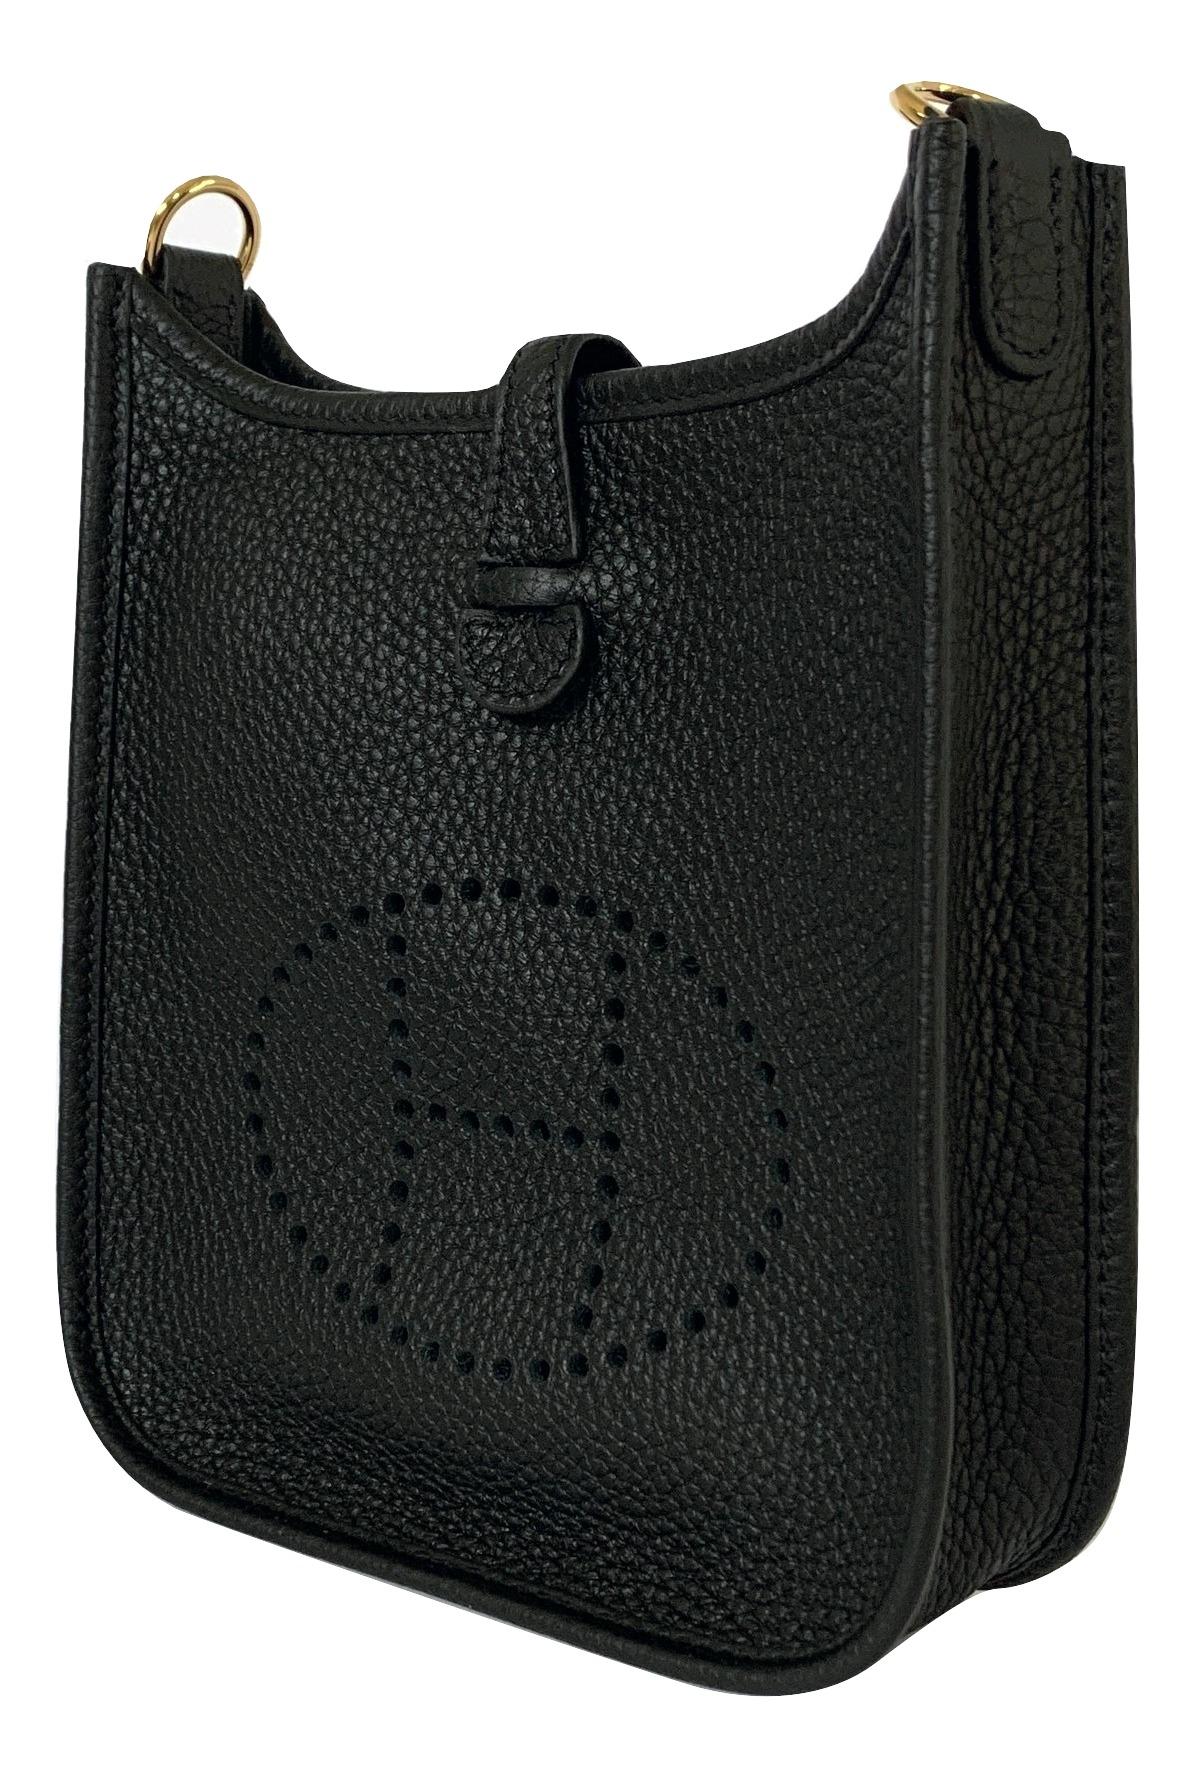 Hermes Evelyne Tpm

Black

Taurillon Clemence Leather
Measurements: 6.75